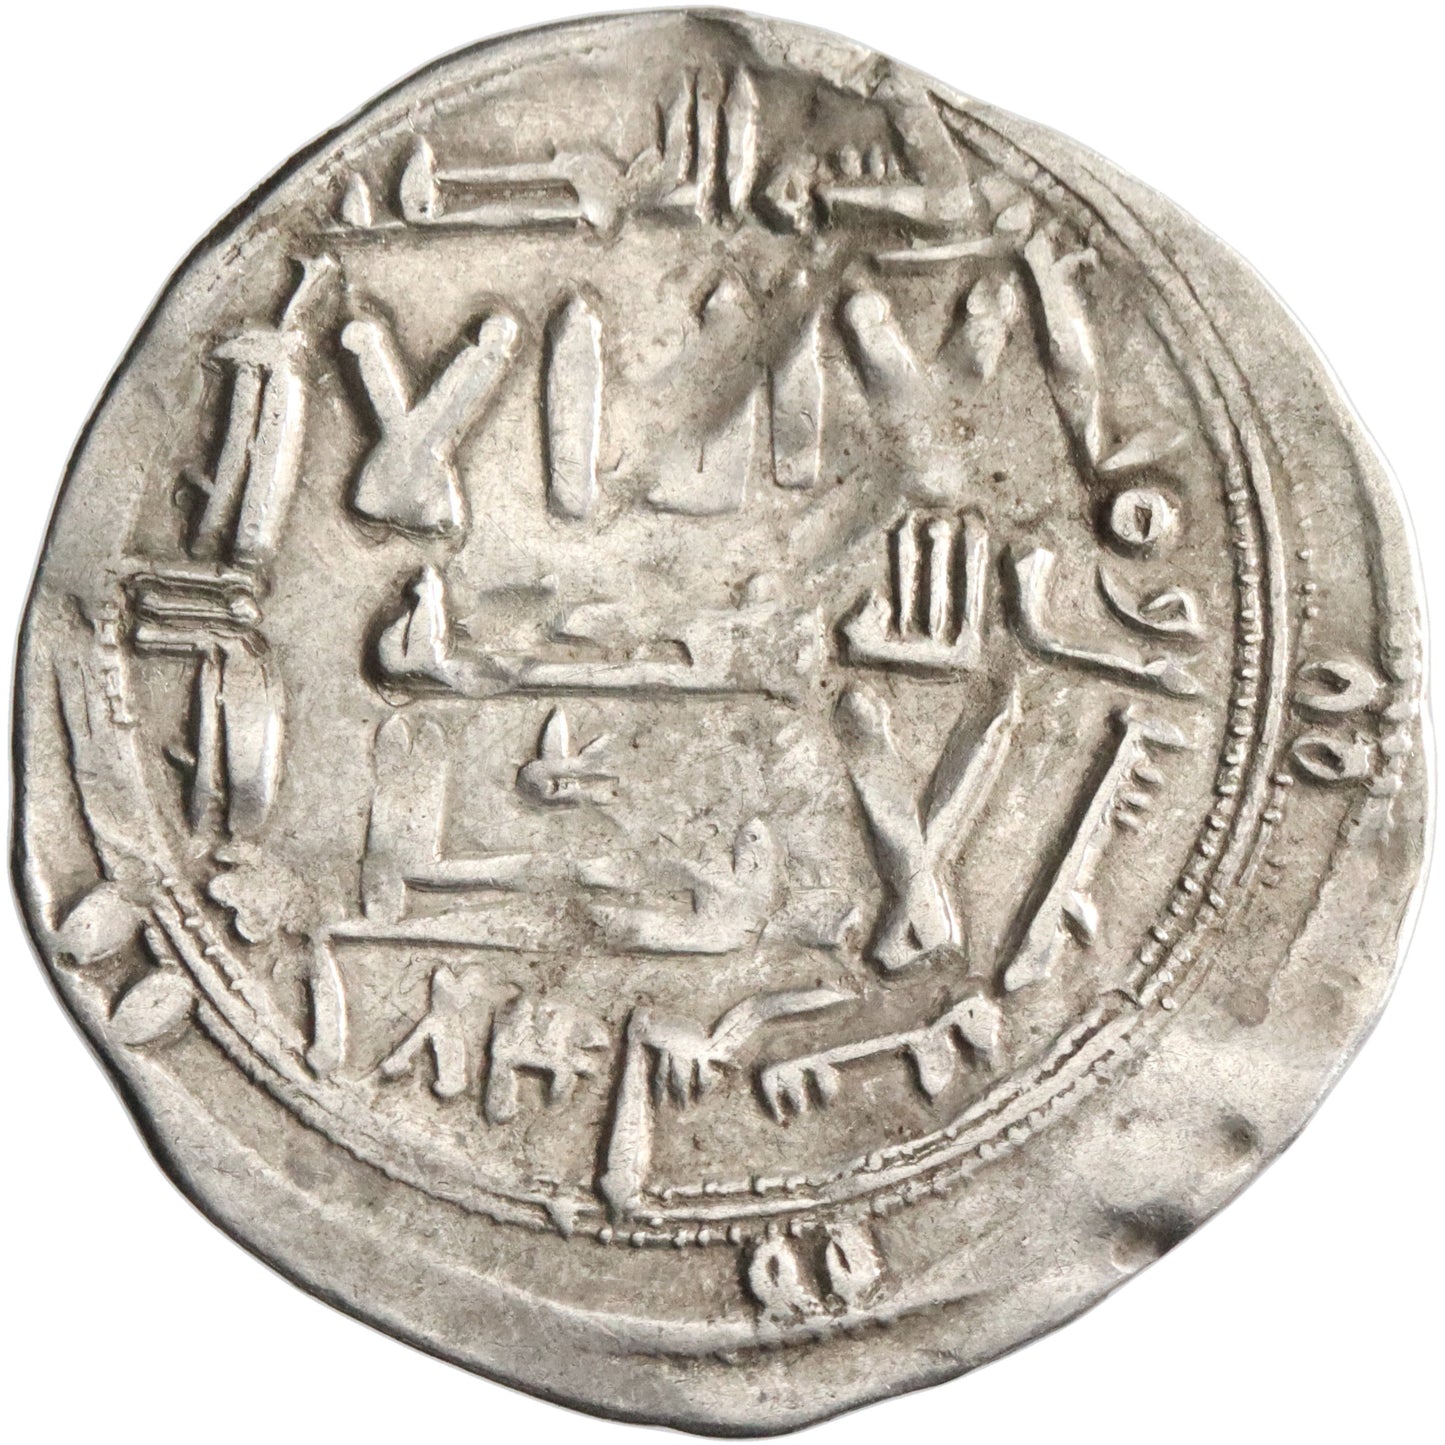 Umayyad of Spain, 'Abd al-Rahman II, silver dirham, al-Andalus (Spain) mint, AH 220